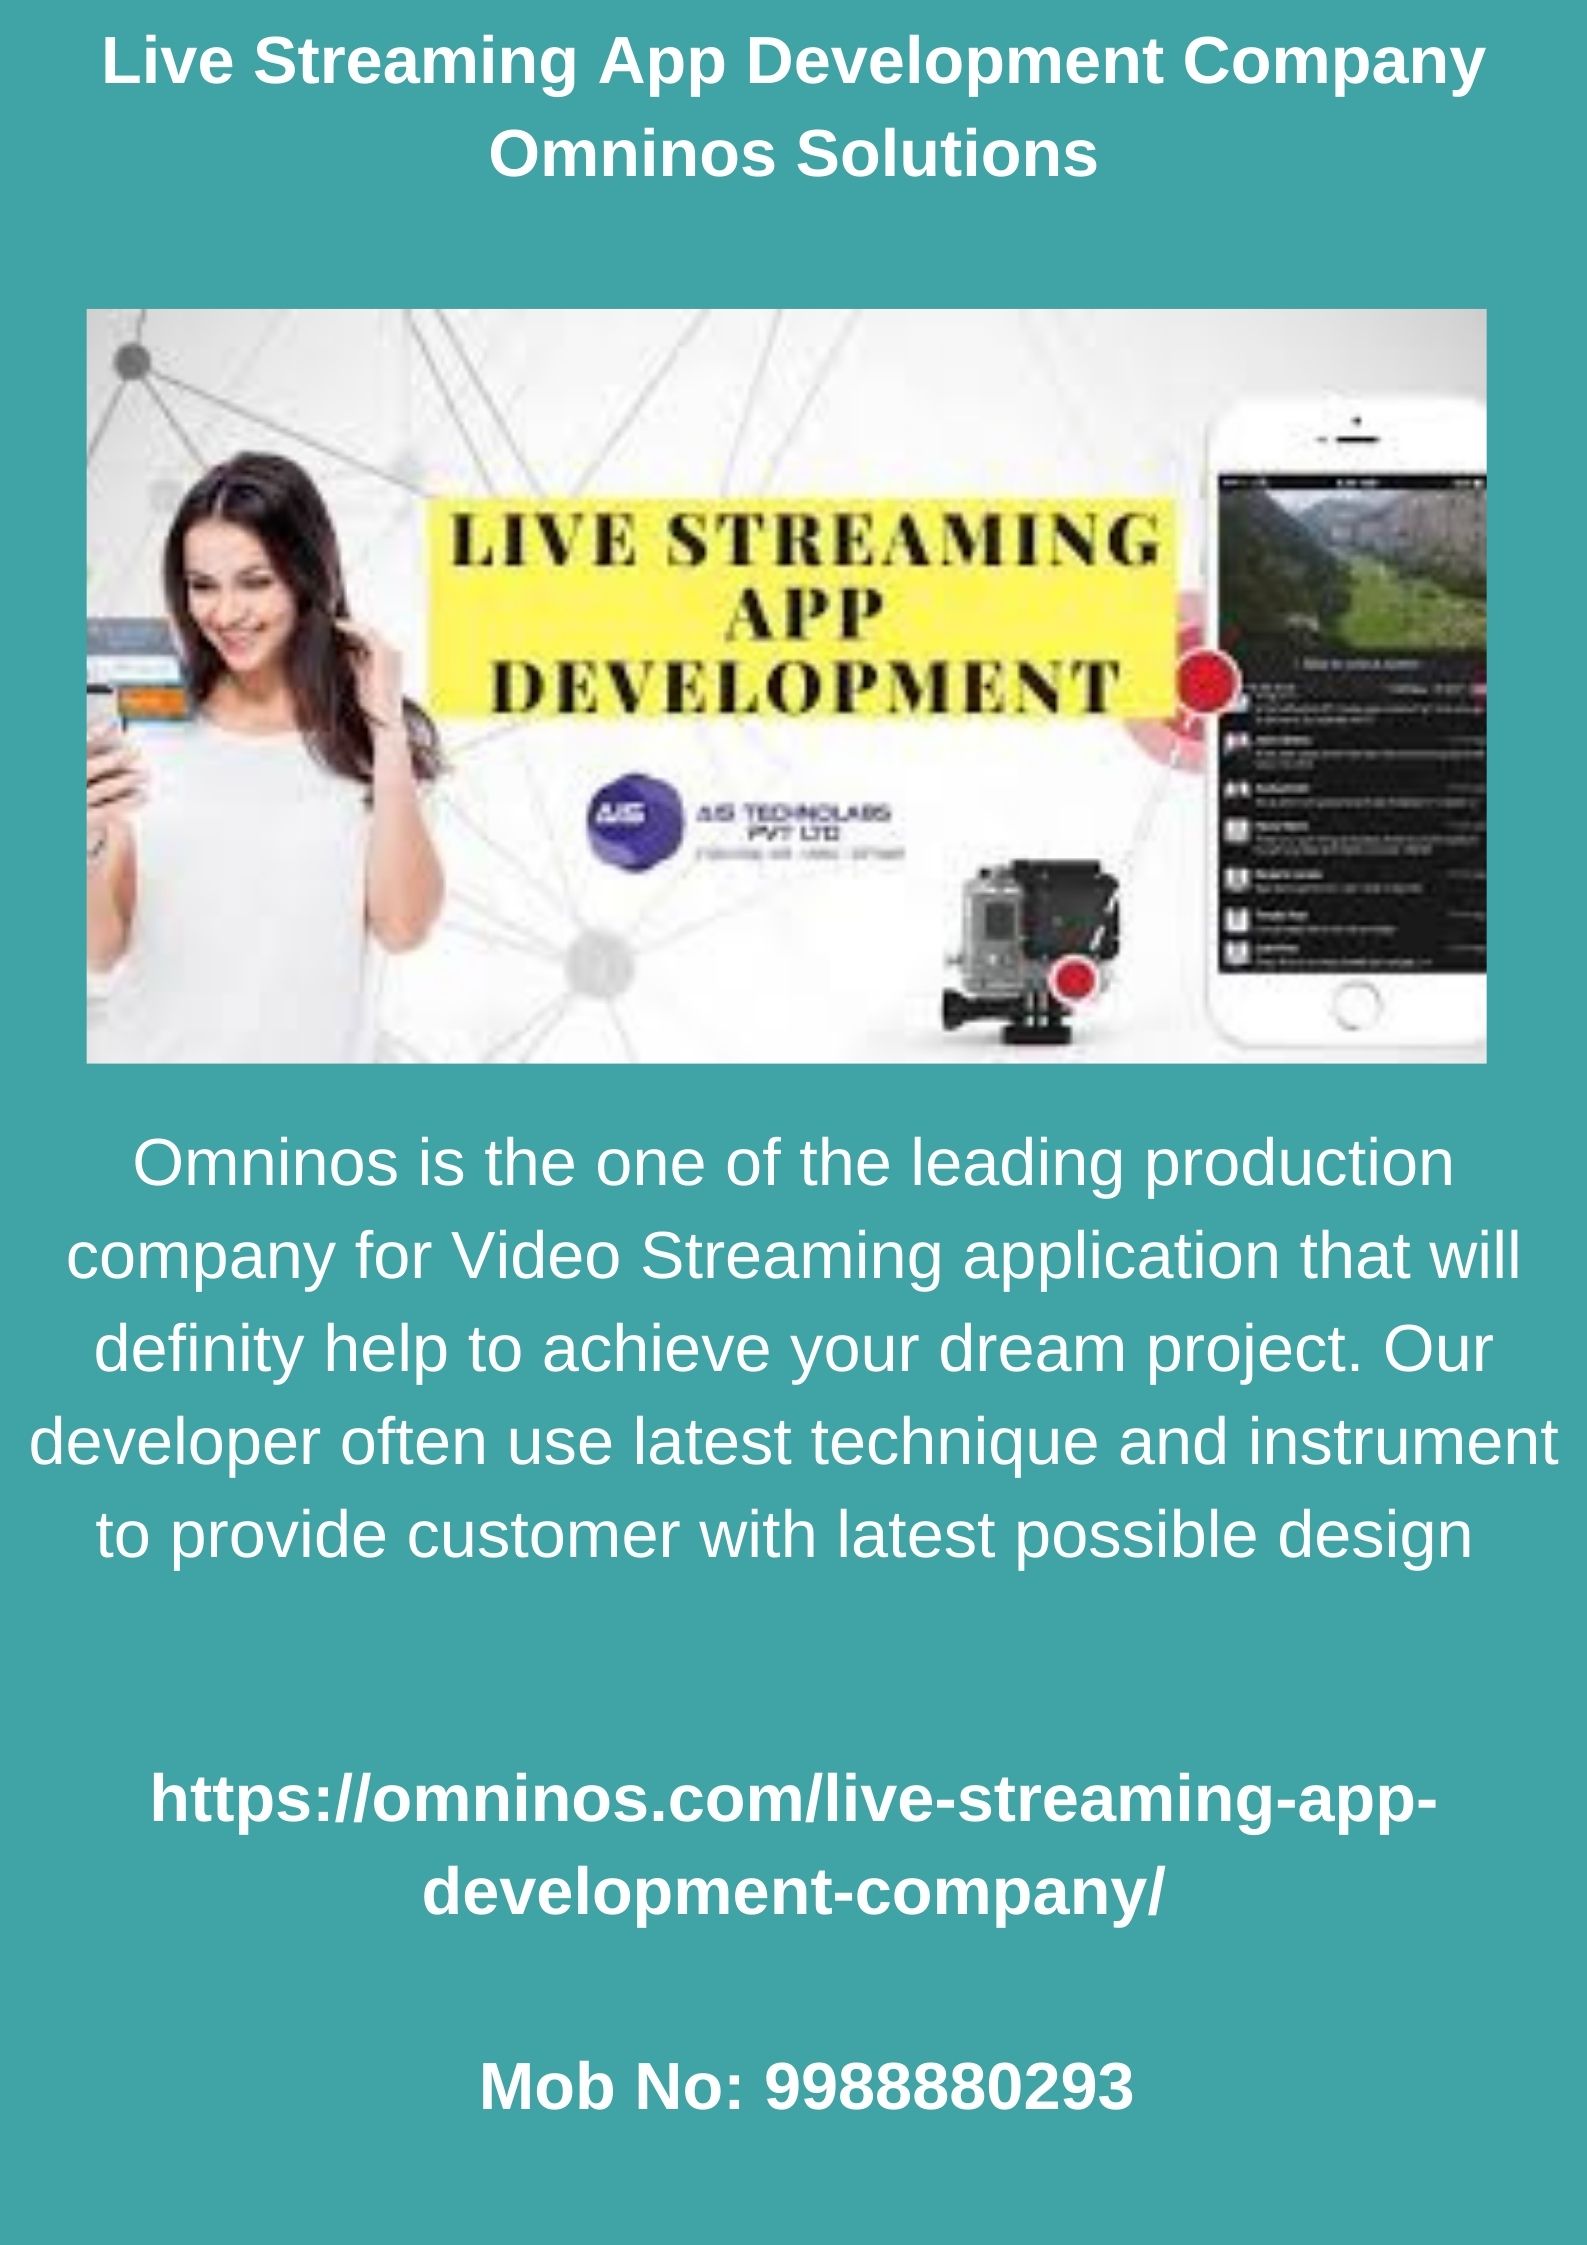 Live Streaming App Development Company- Omninos Solutions.jpg  by amritkaur